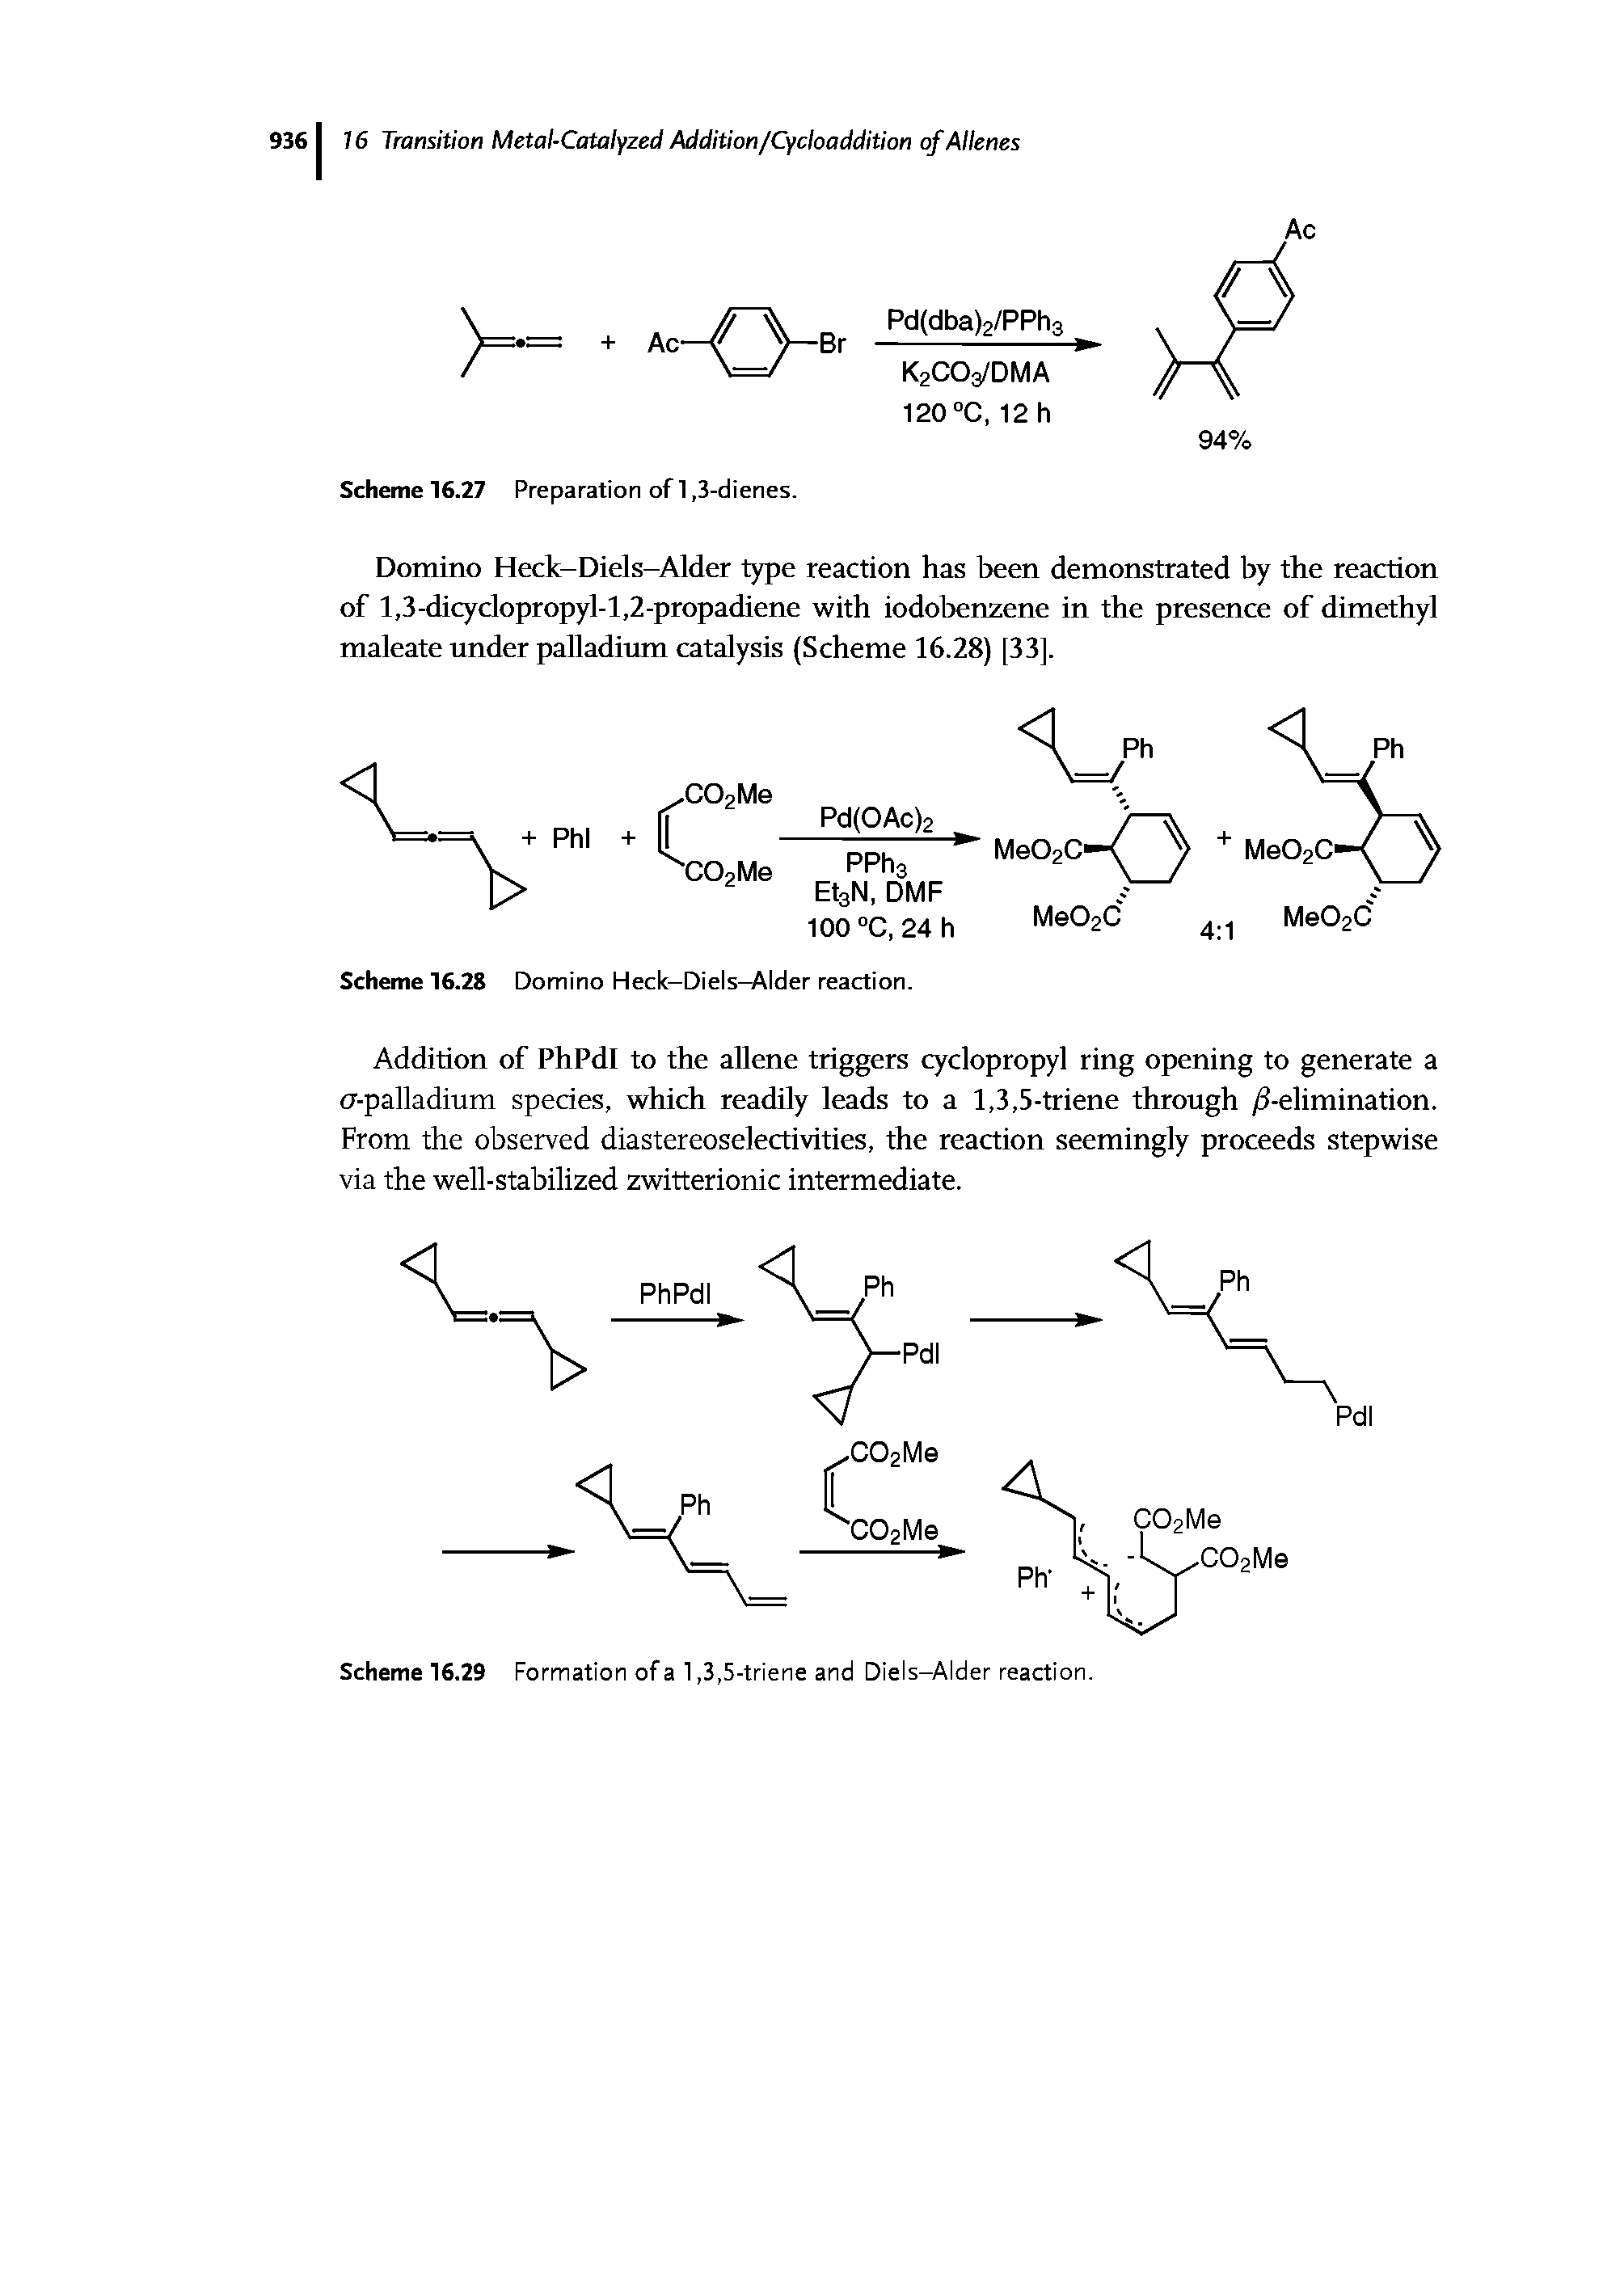 Scheme 16.29 Formation of a 1,3,5-triene and Diels-Alder reaction.